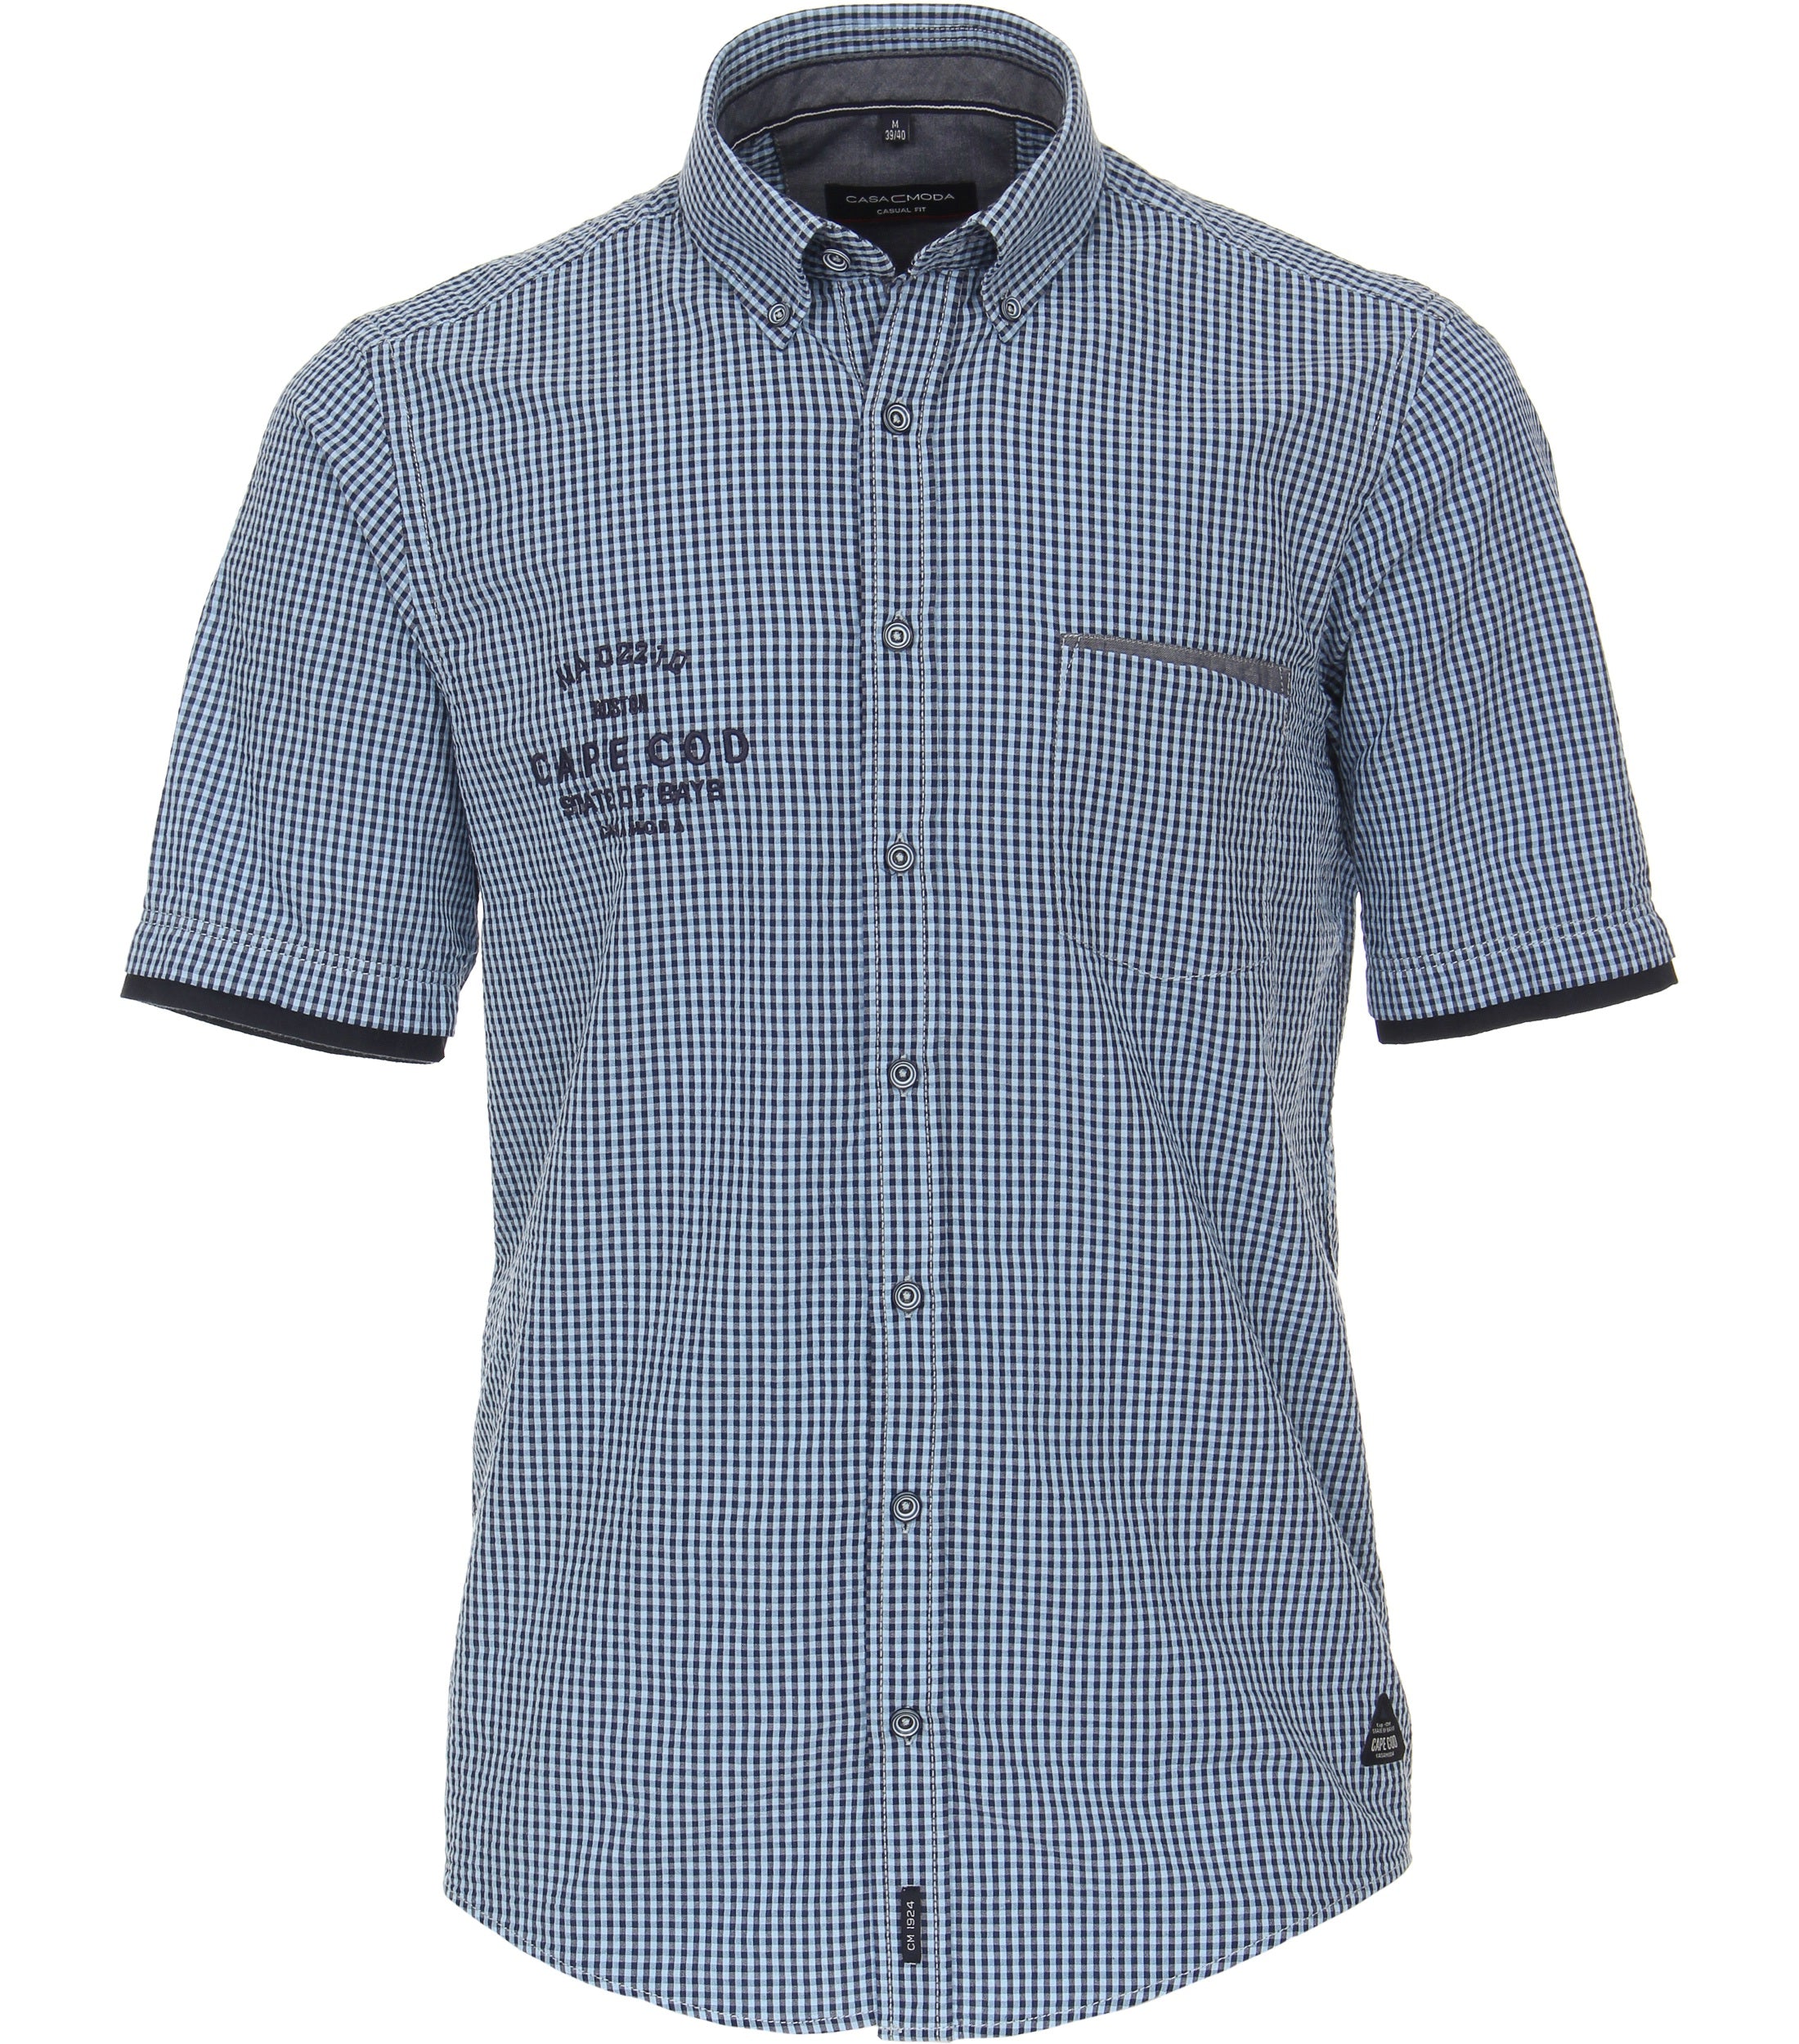 Casa Moda - Short Sleeve Cotton Shirt - Modern Casual Fit - 993124800  Clearance